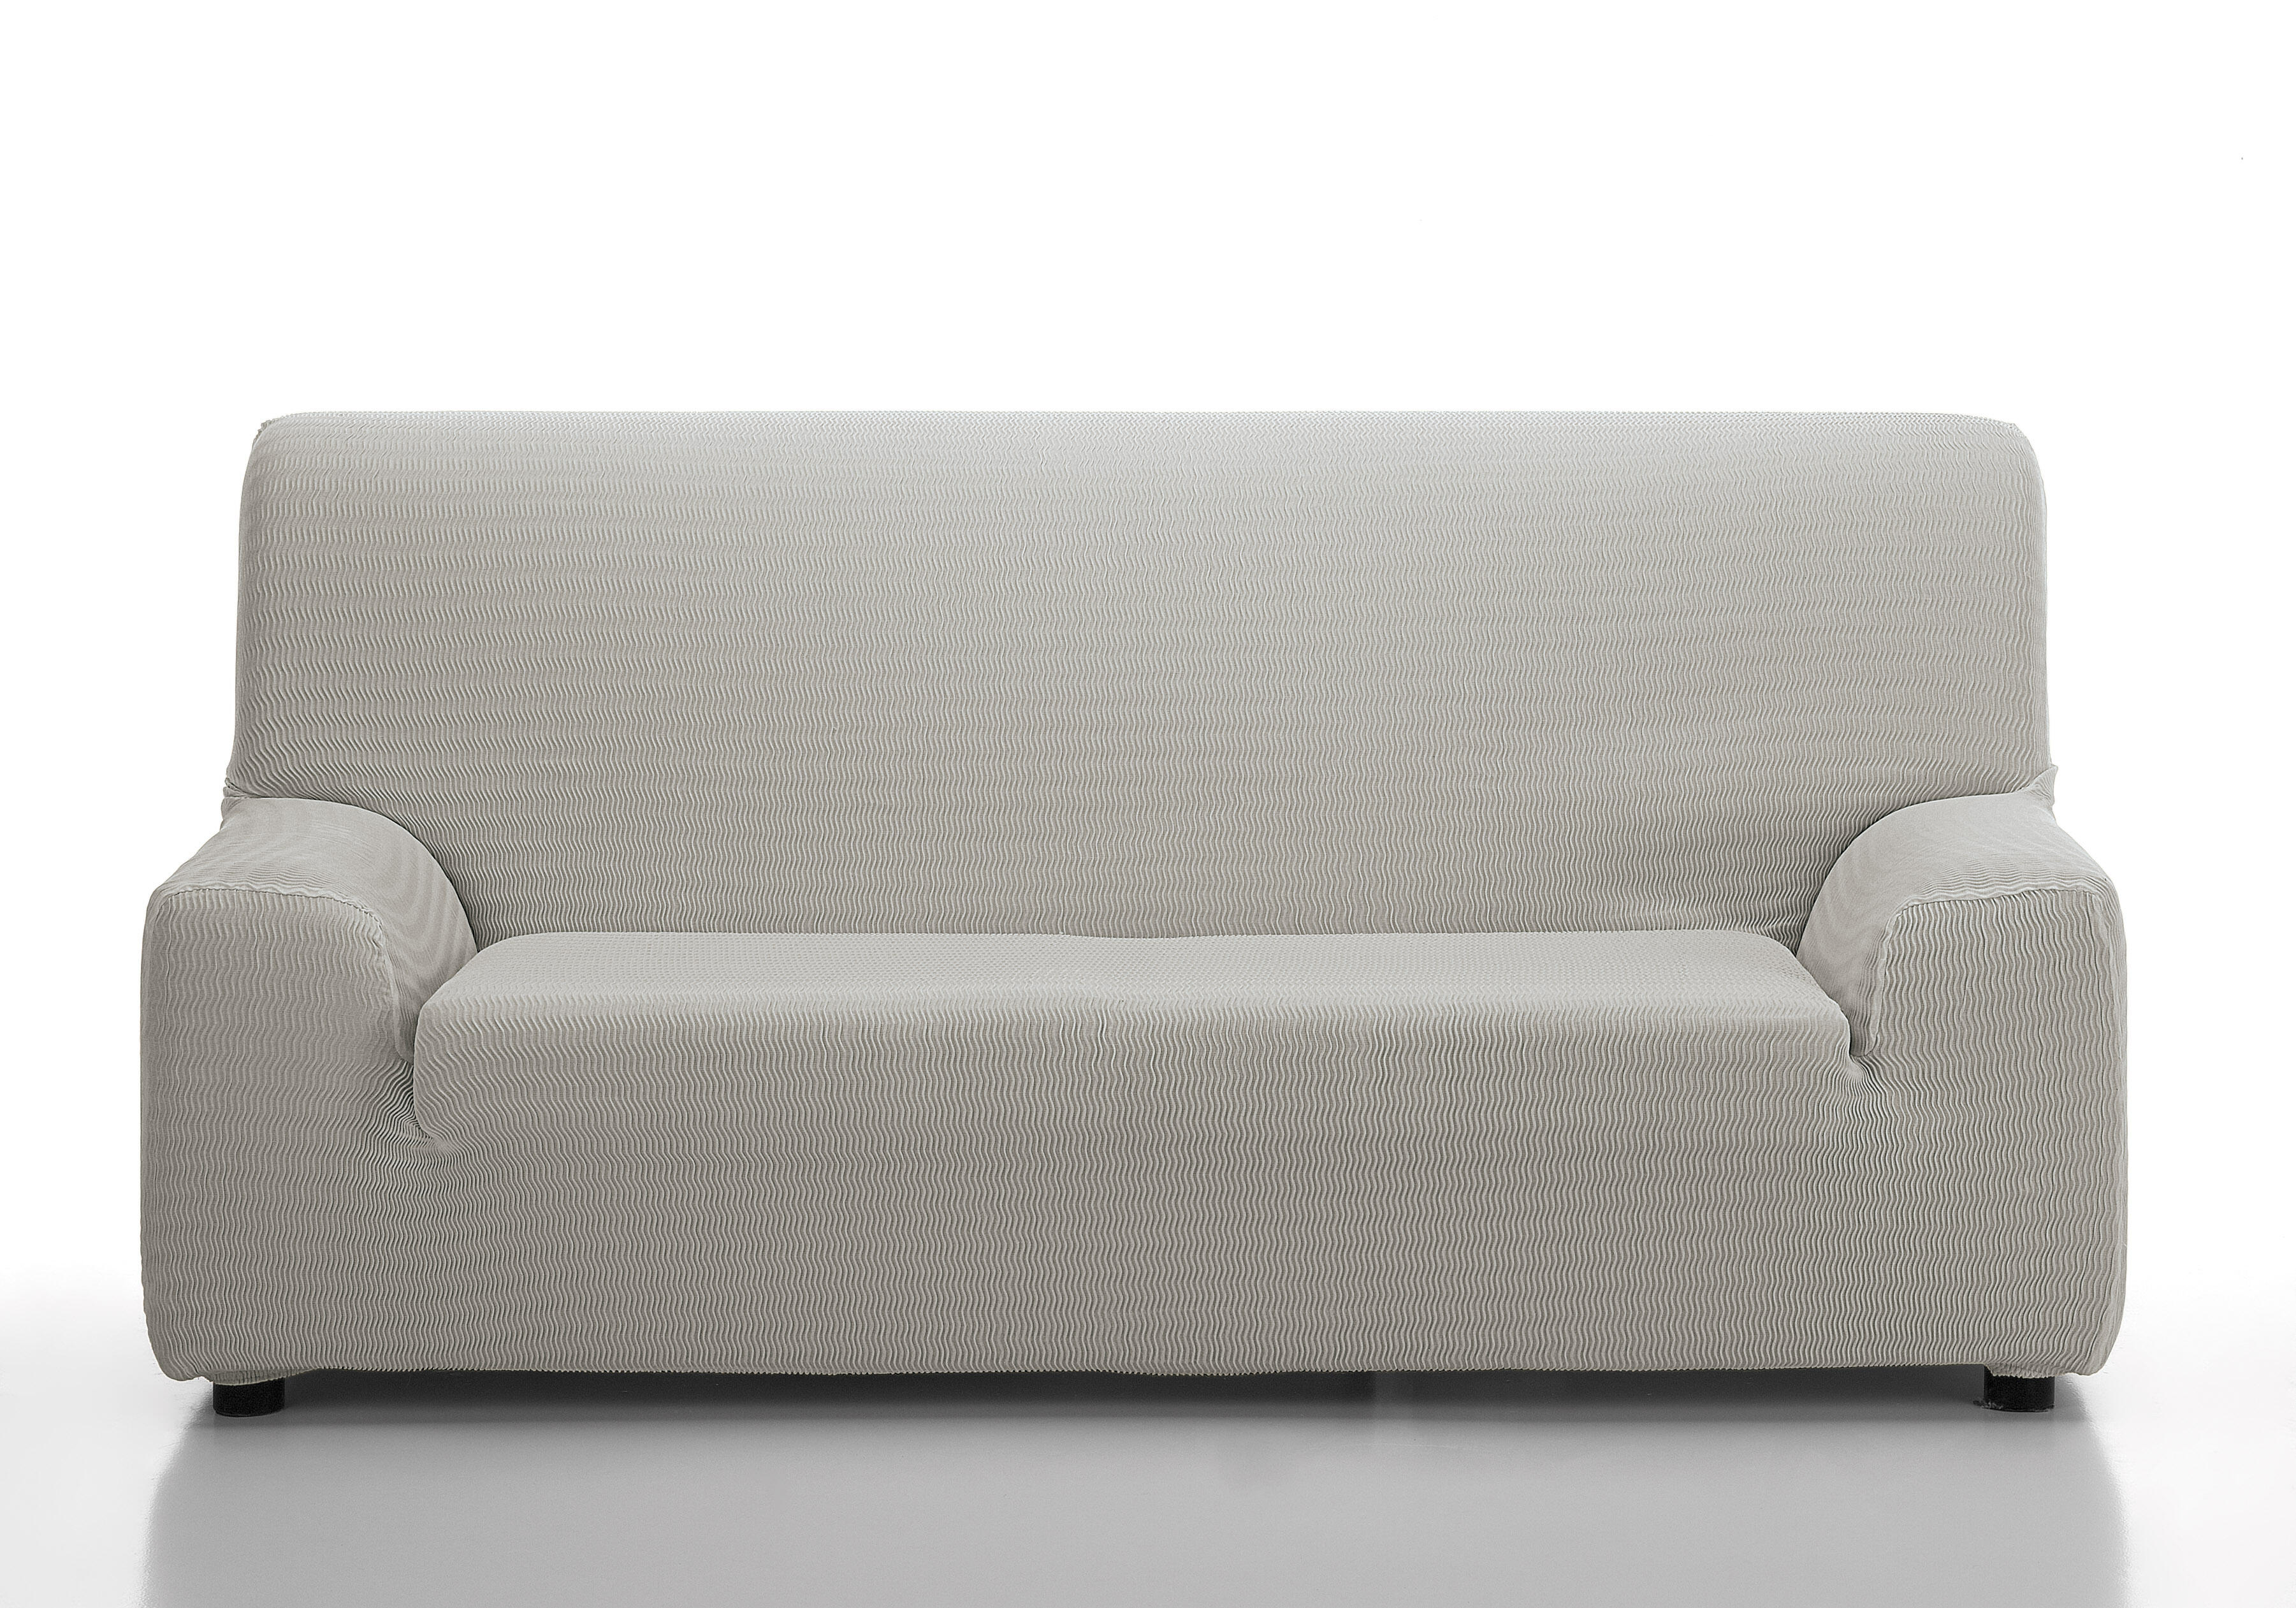  Lamberia - Funda elástica para sofá de 4 plazas con